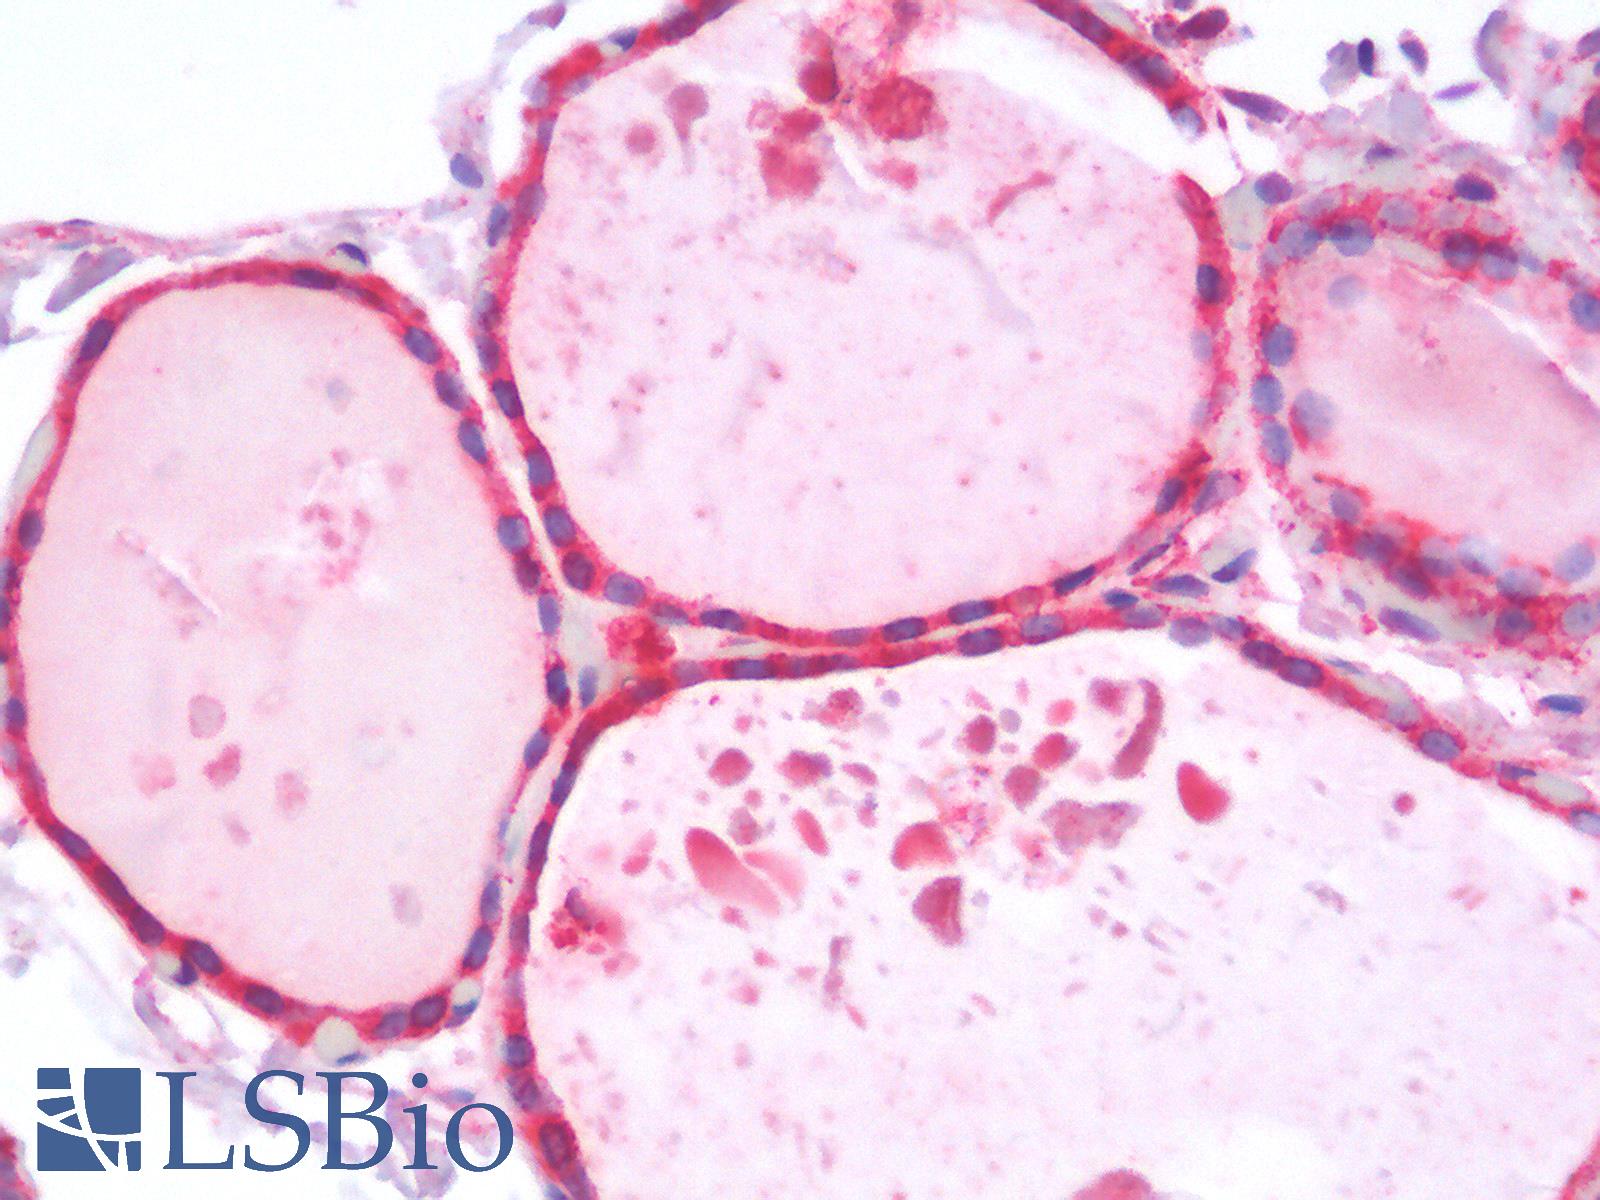 HSPA5 / GRP78 / BiP Antibody - Human Thyroid: Formalin-Fixed, Paraffin-Embedded (FFPE)